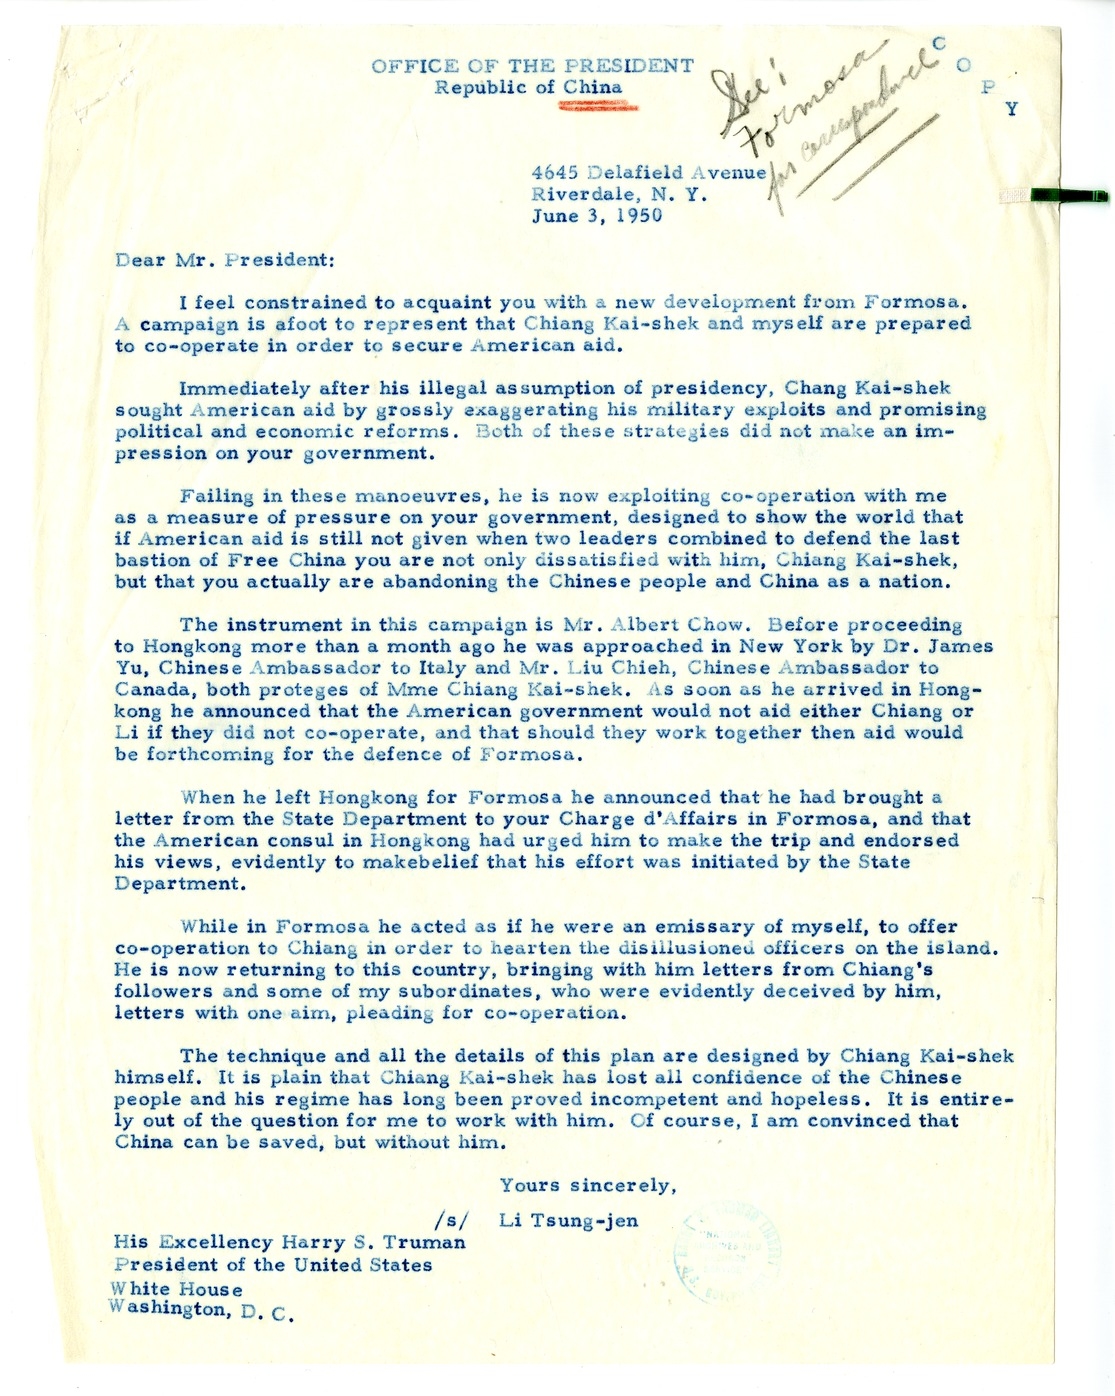 Letter from Li Tsung-jen to President Harry S. Truman